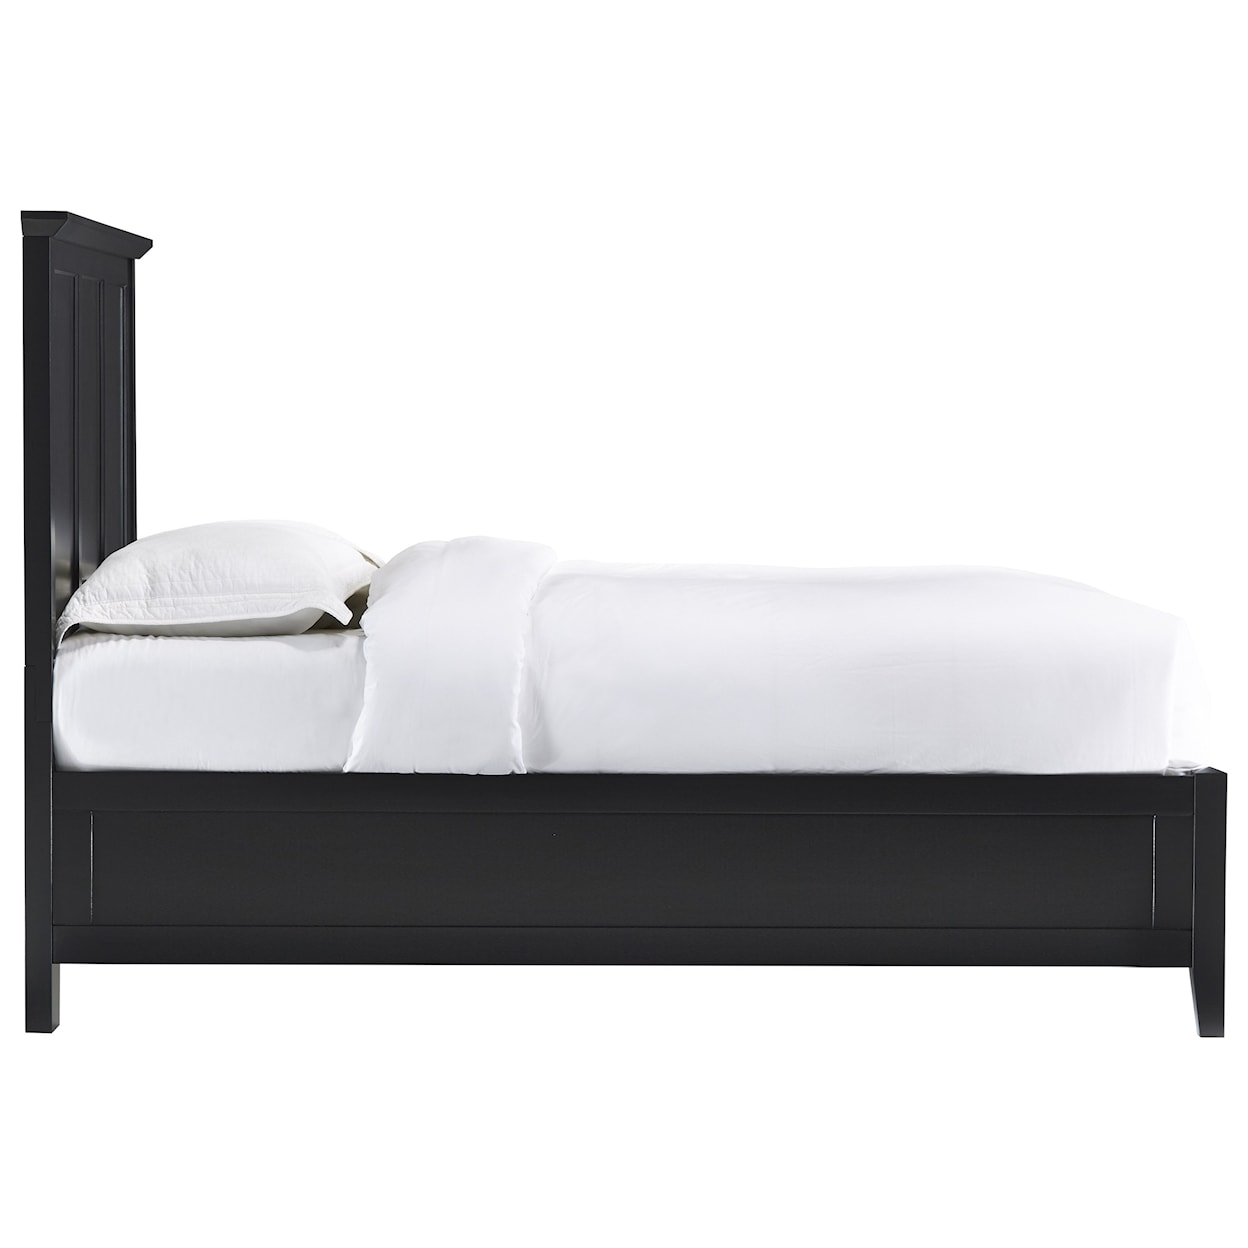 Modus International Paragon California King Low-Profile Bed